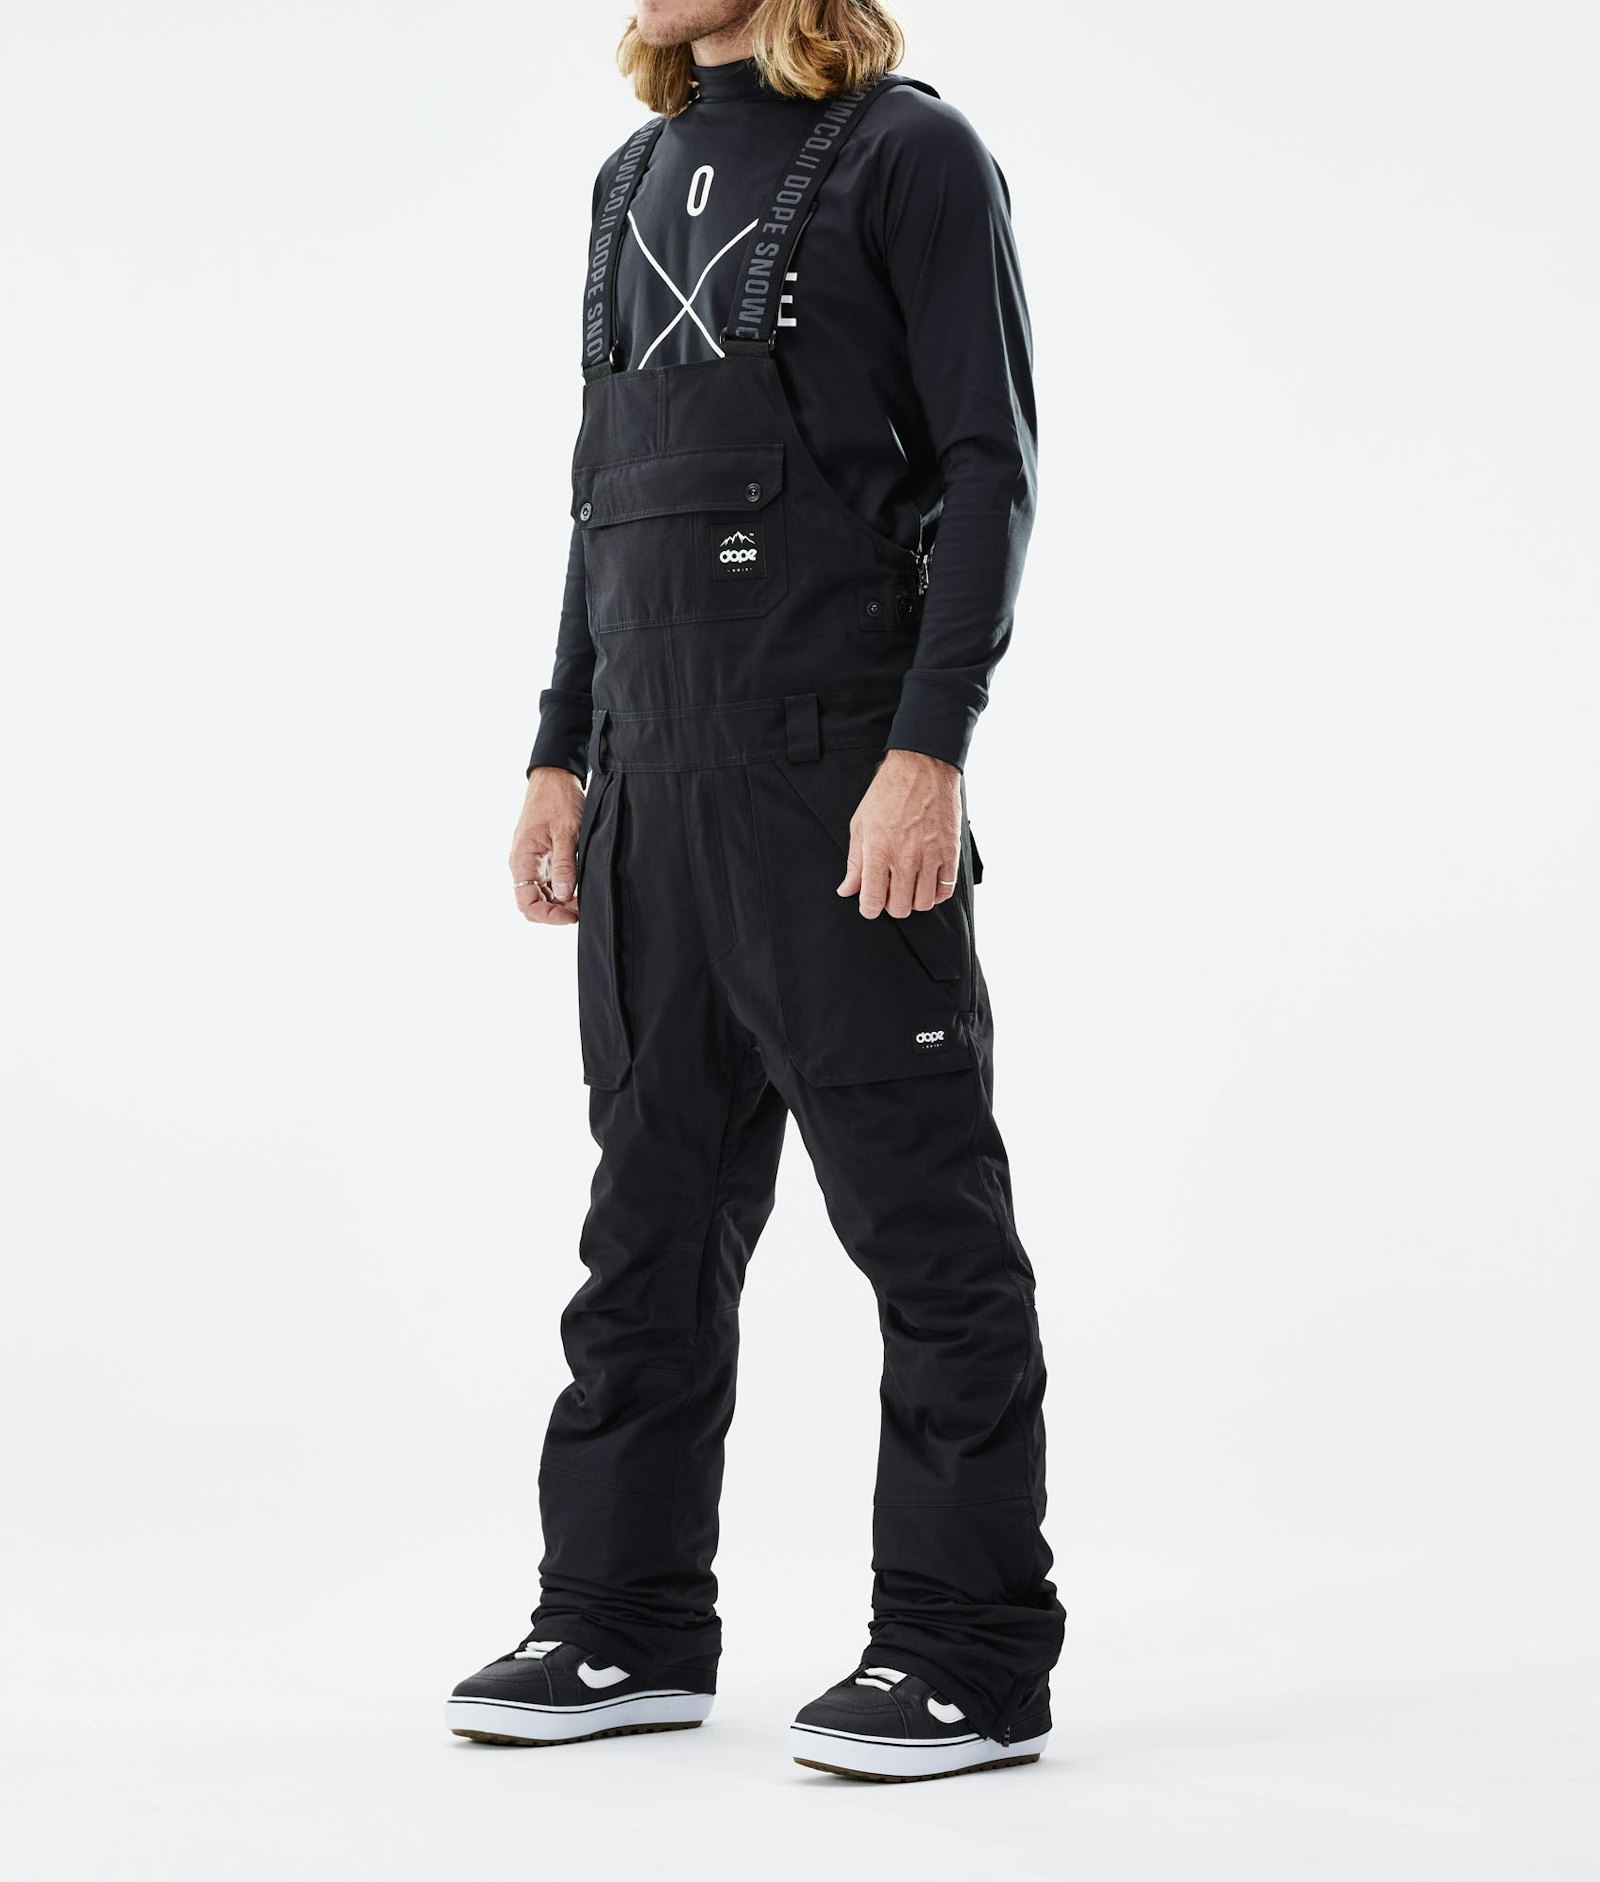 Notorious B.I.B 2021 Pantalon de Snowboard Homme Black Renewed, Image 1 sur 6